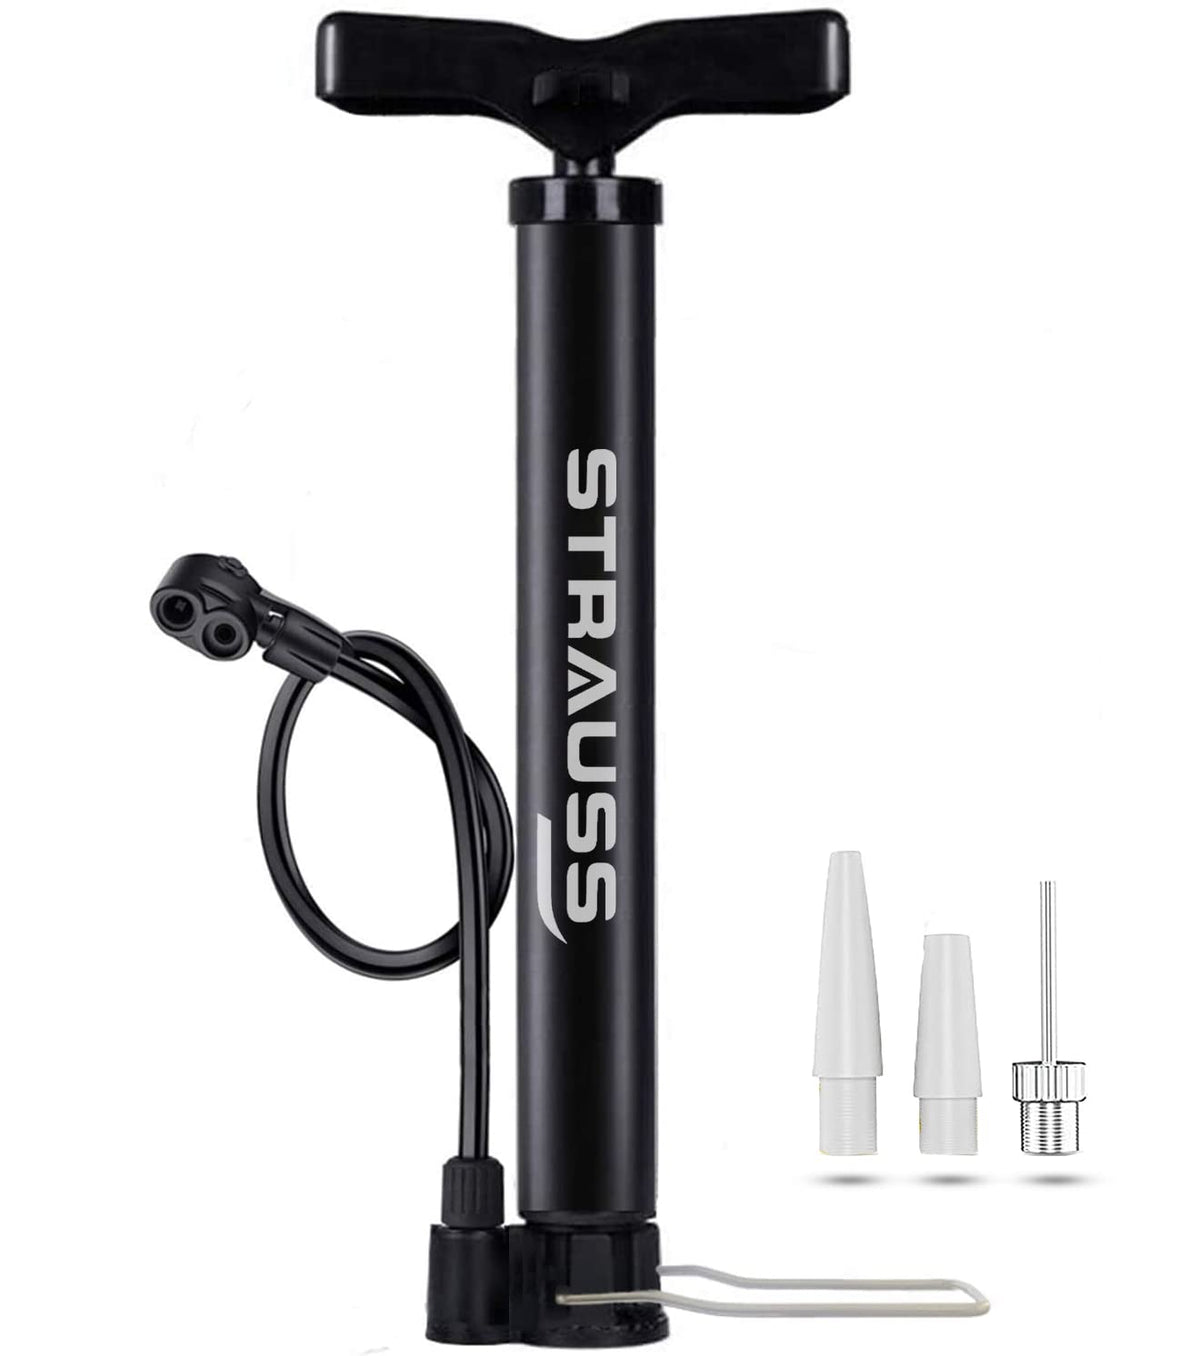 Strauss High Pressure Multipurpose Air Pump | Inflatable Air Pump | Floor Air Pumps for Bicycle, Car, Ball, Motorcycle,(Red)